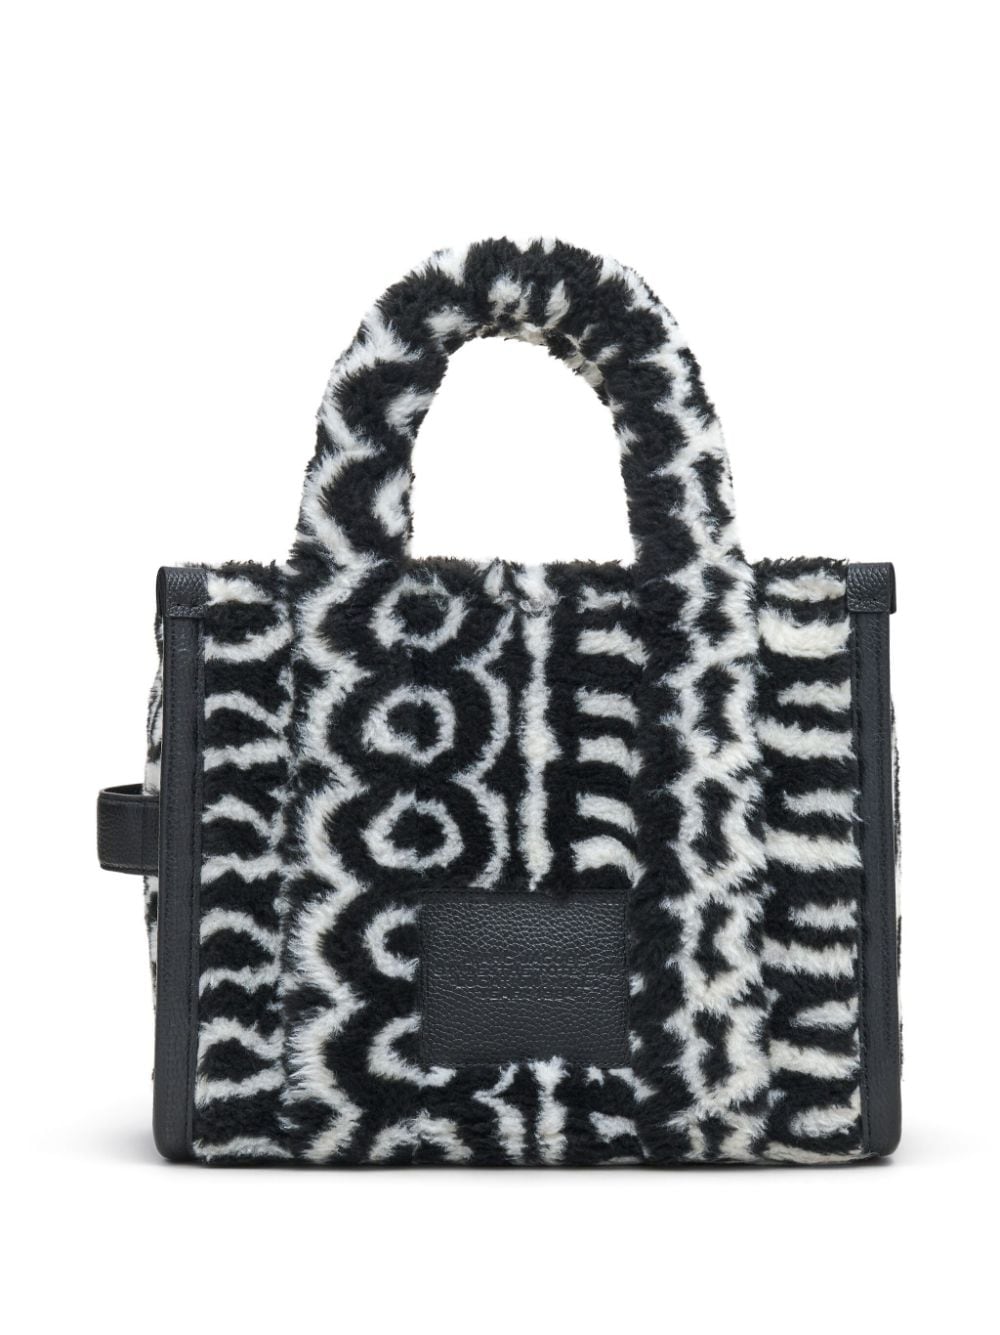 MARC JACOBS Medium Two-Tone Faux Fur Tote Handbag with Logo Detail